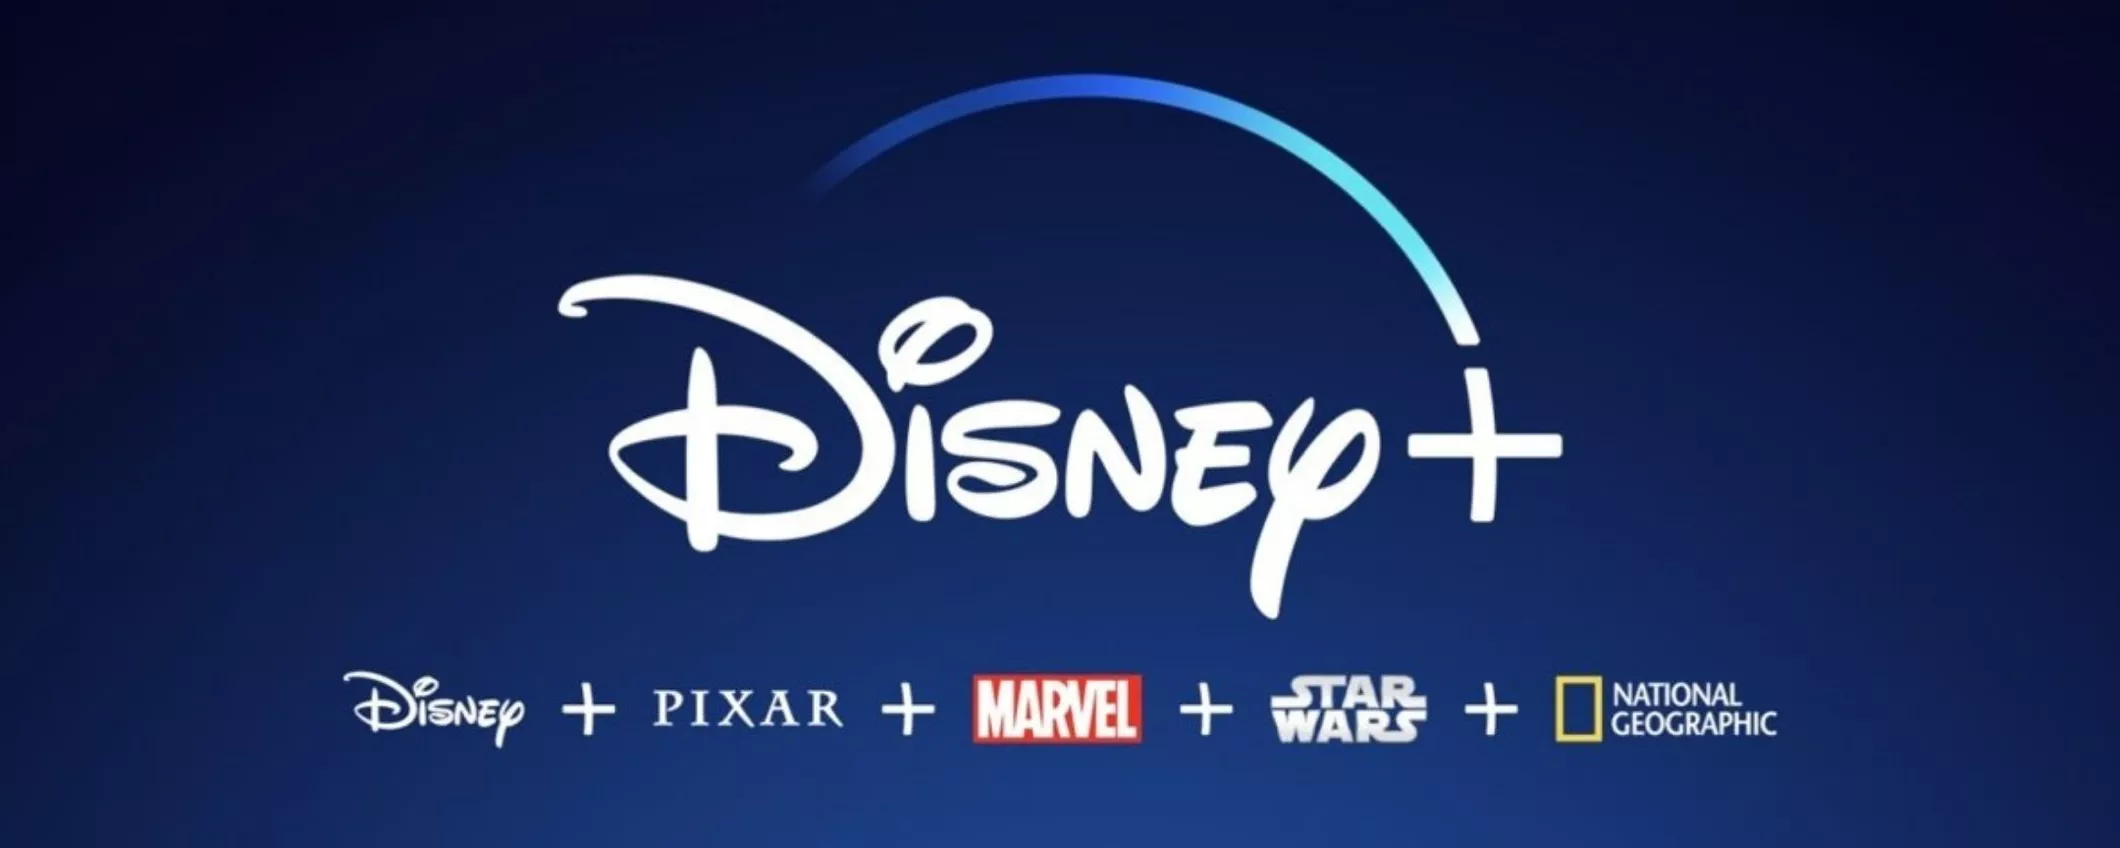 Disney+ Day: offerta lancio 1,99 euro per un mese